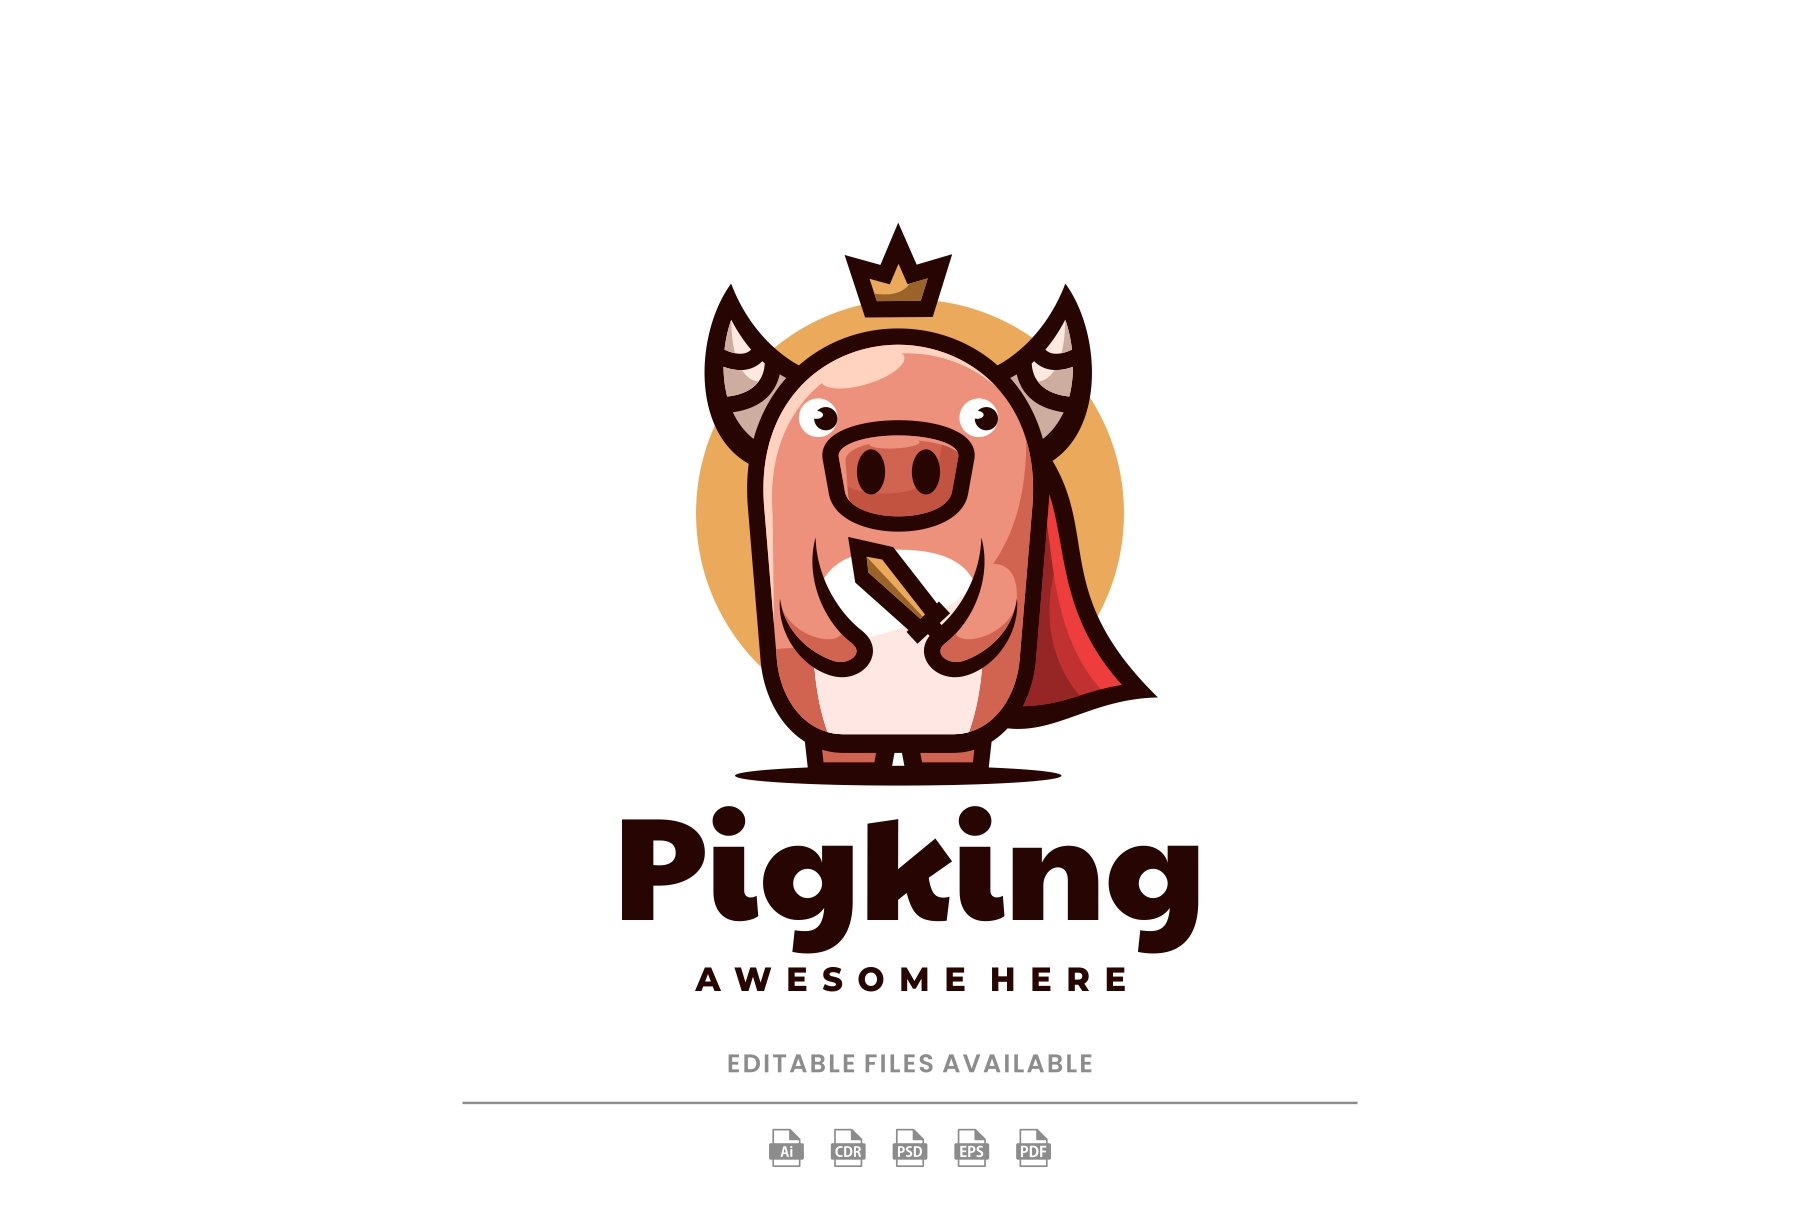 Pig King Simple Mascot Logo cover image.